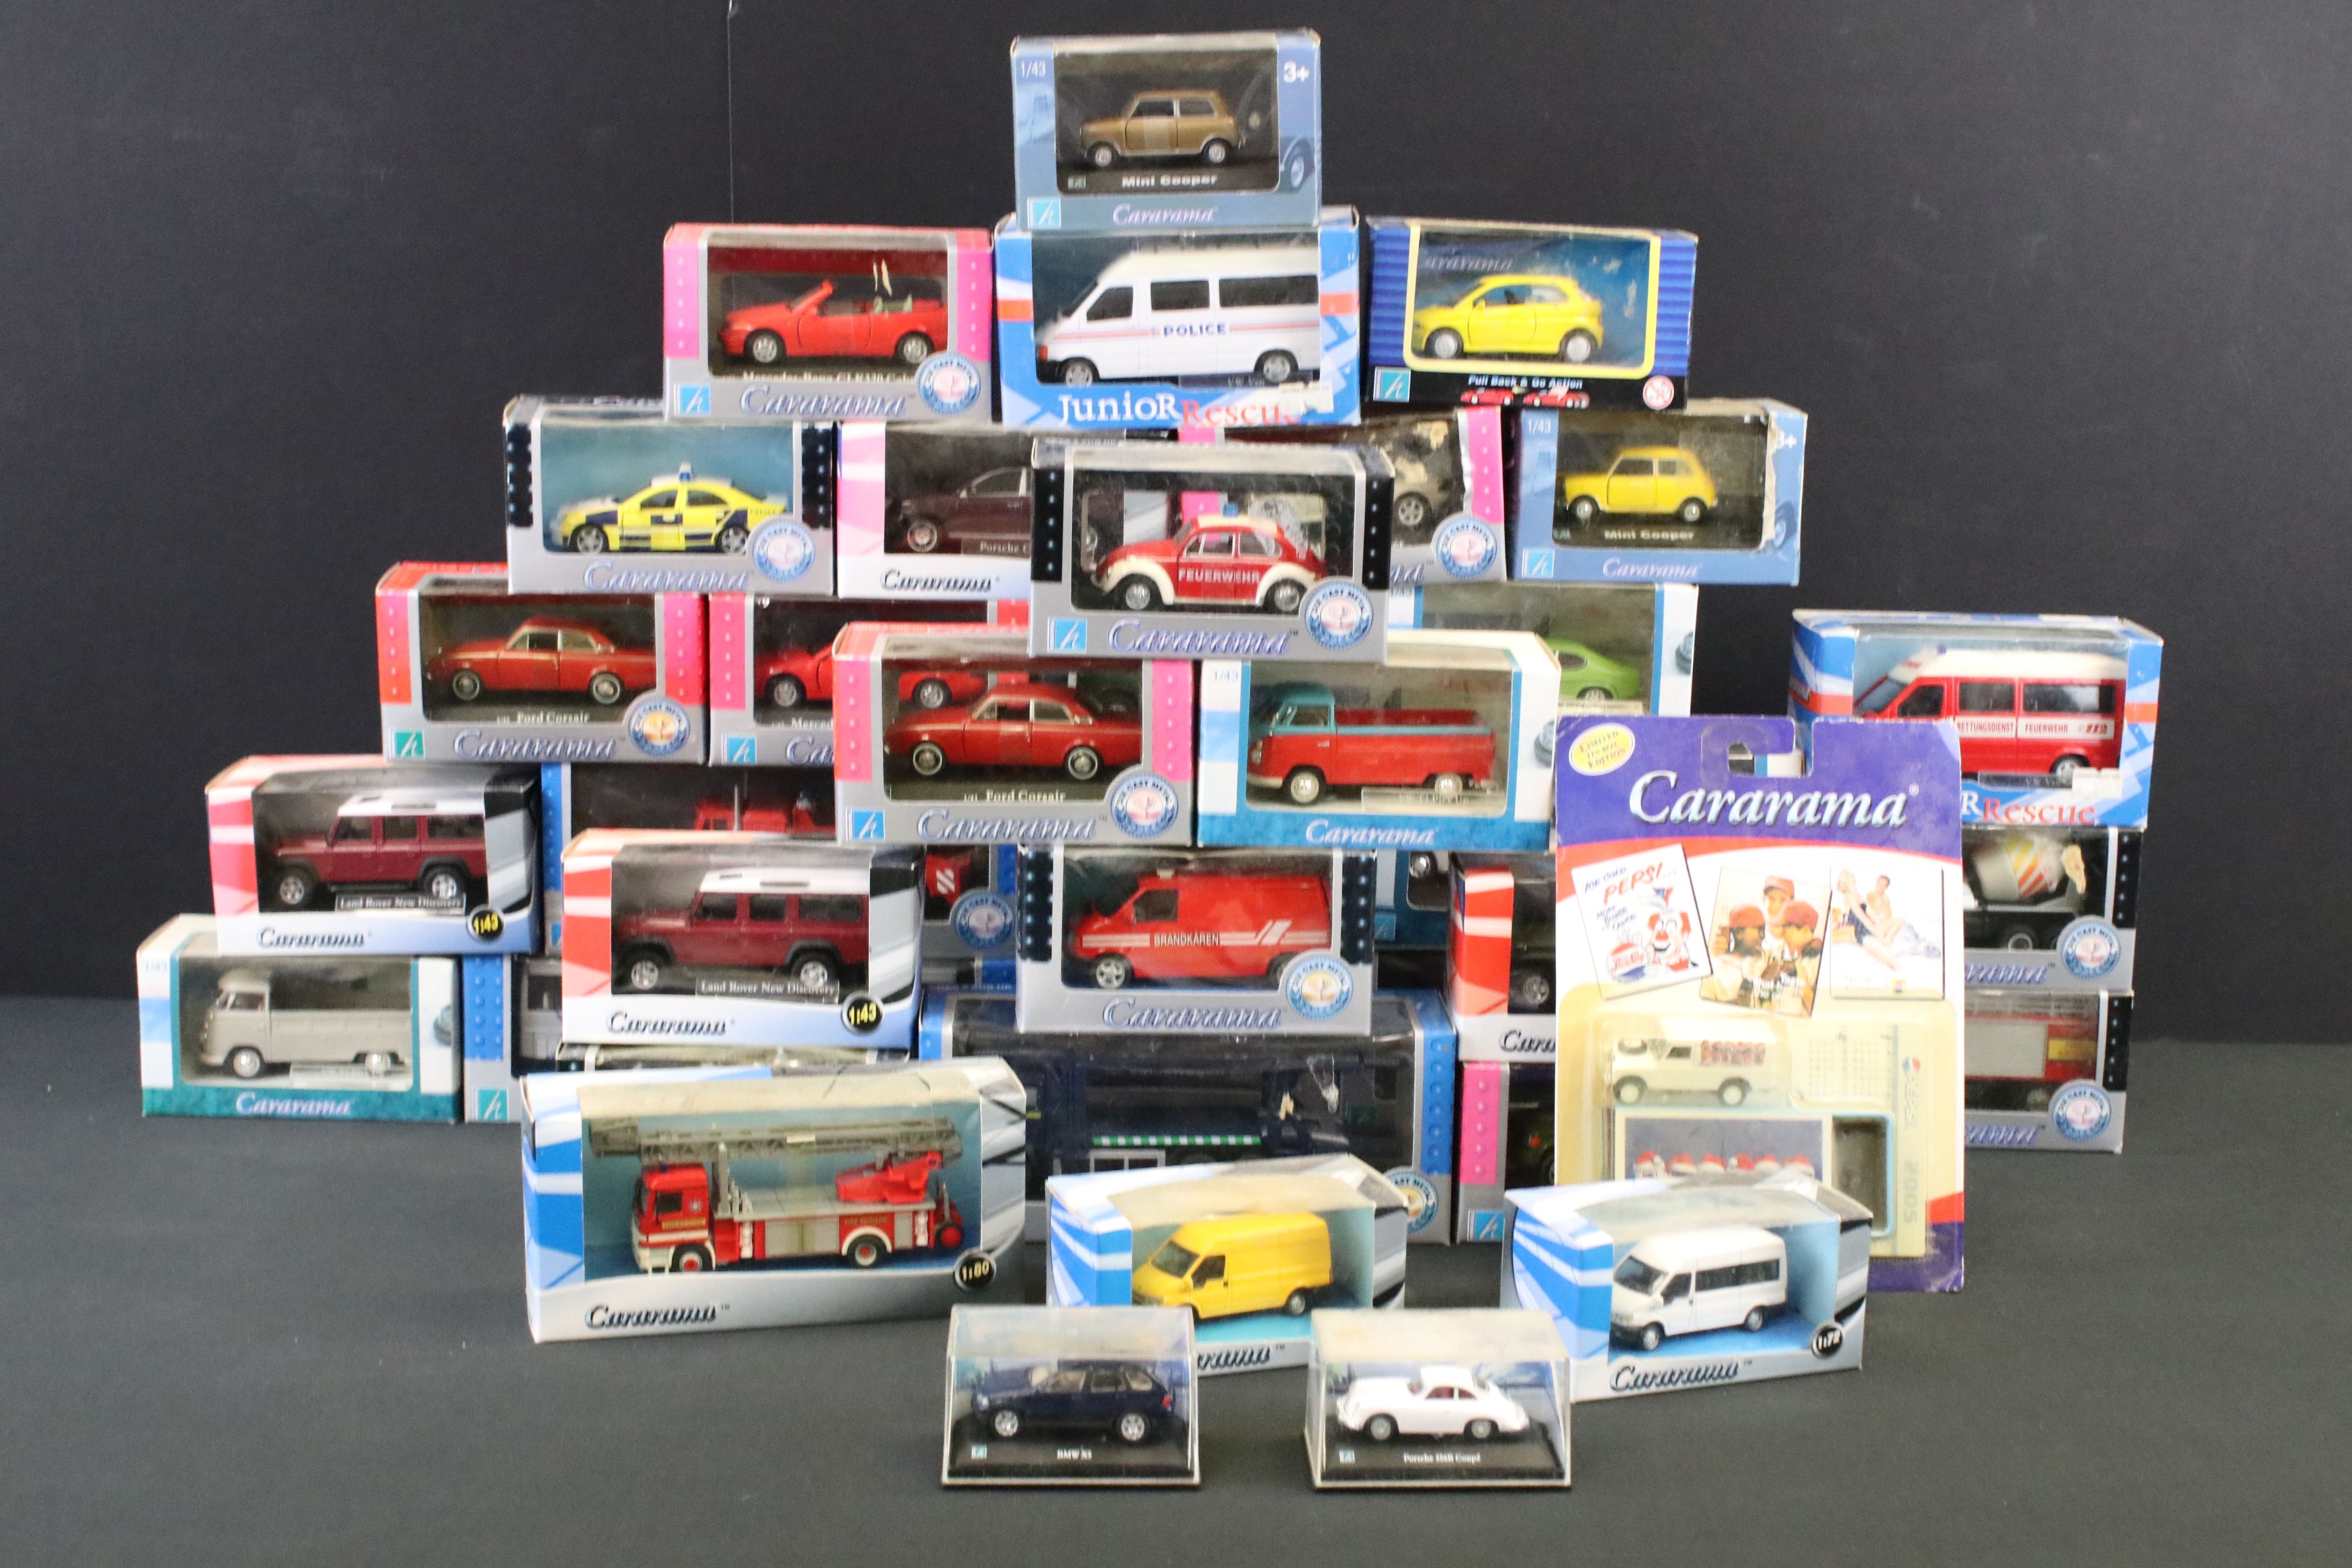 37 Boxed Cararama diecast models to include No. 252 1/43 Volkswagen Microbus multi-model set, No.